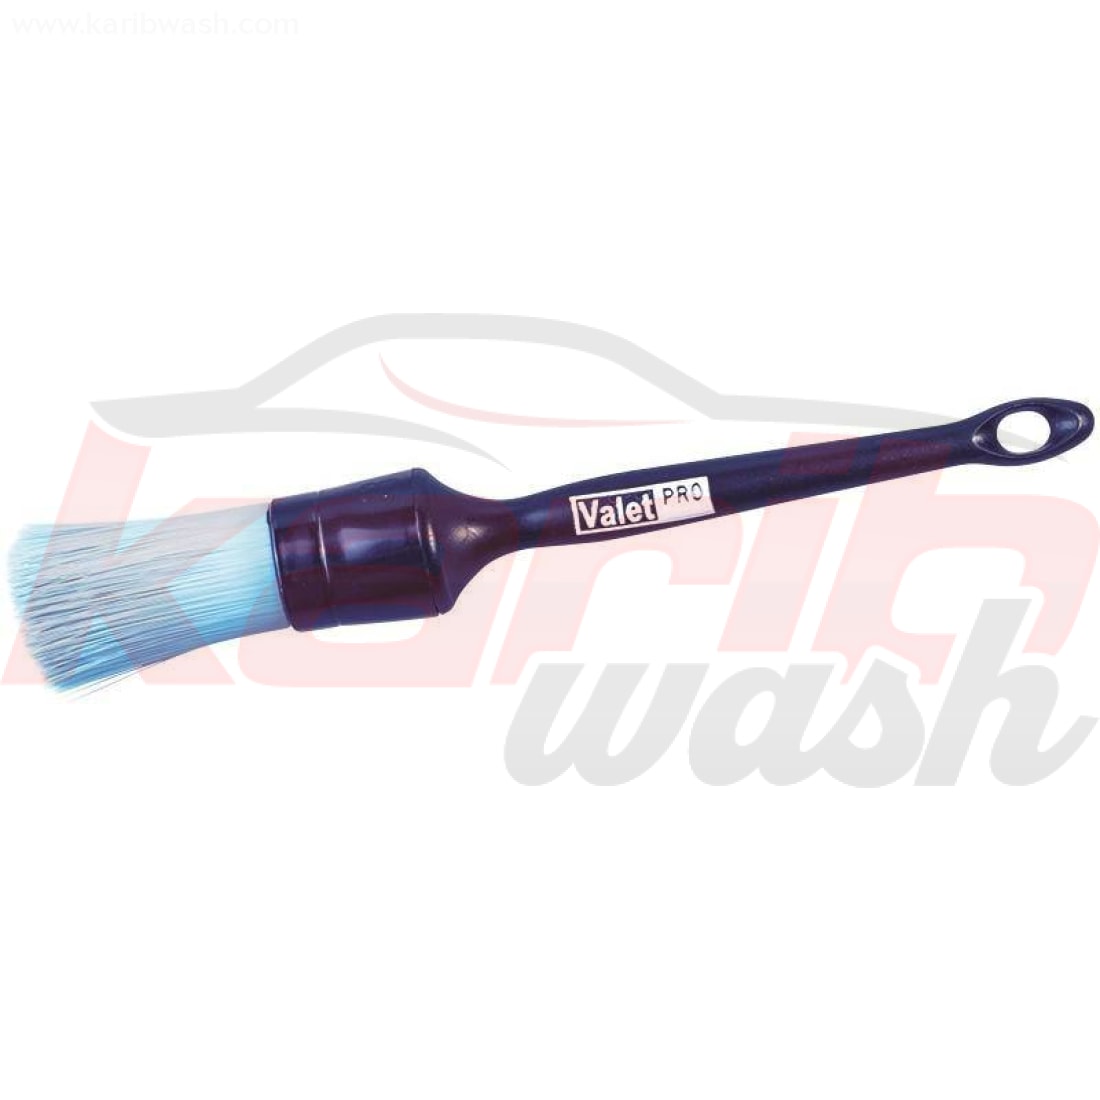 Chemical Resistant Brush, manche en plastique - VALET PRO - KARIBWASH